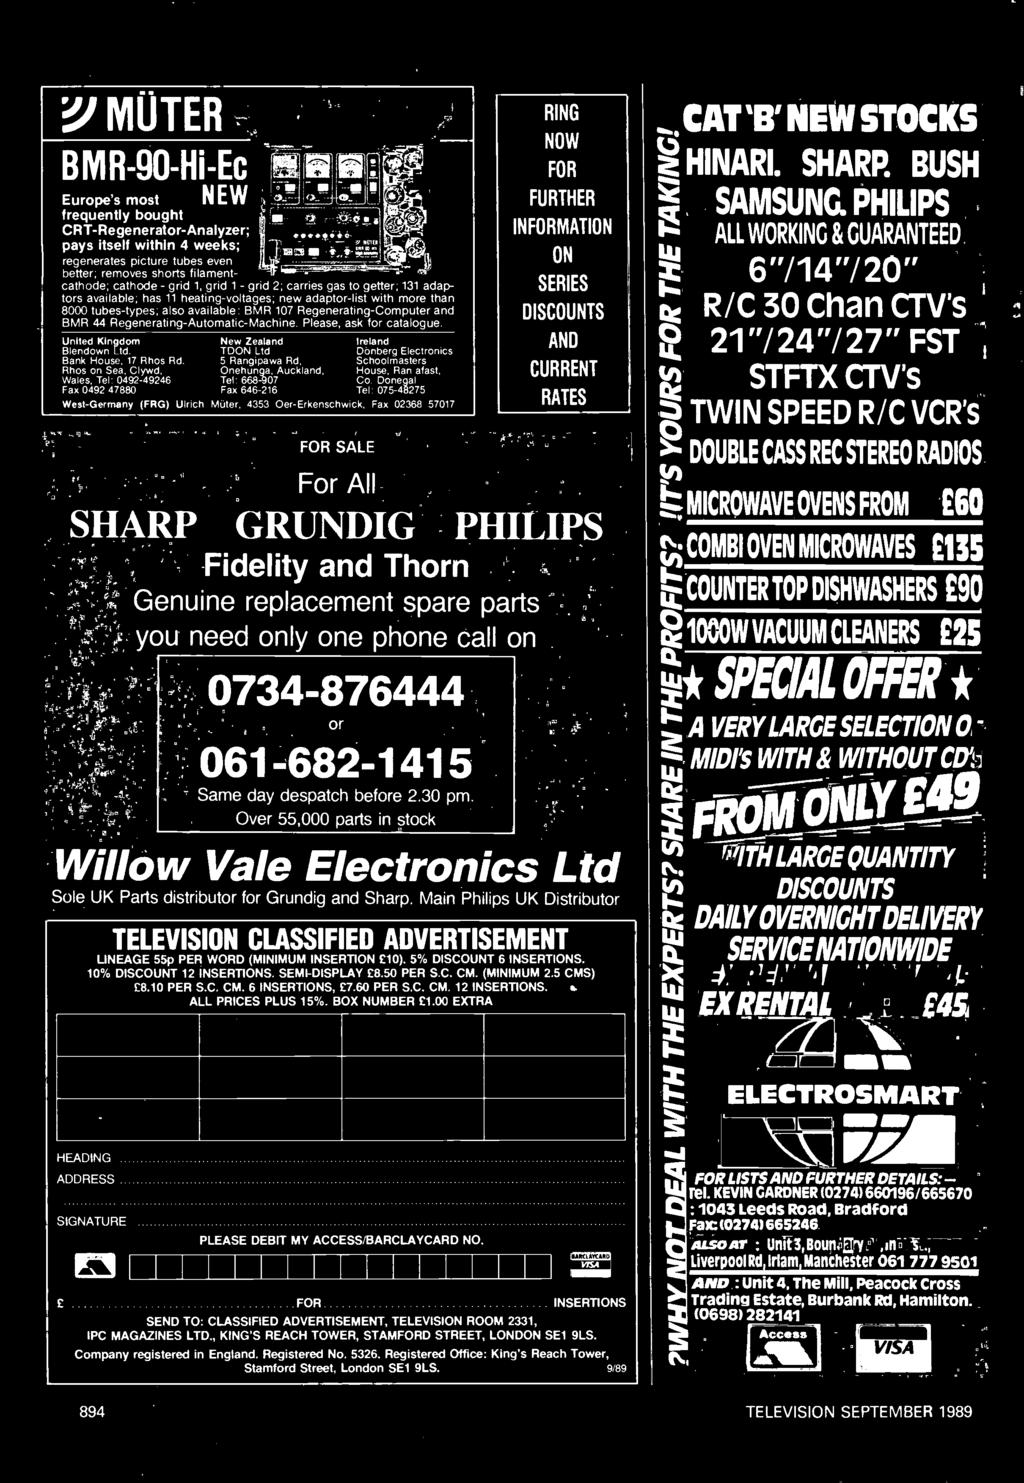 Dbriberg Electronics 5 Rangipawa Rd, Schoolmasters Onehun a, Auckland, House, Ran afast, Tel. 668-907 Co.